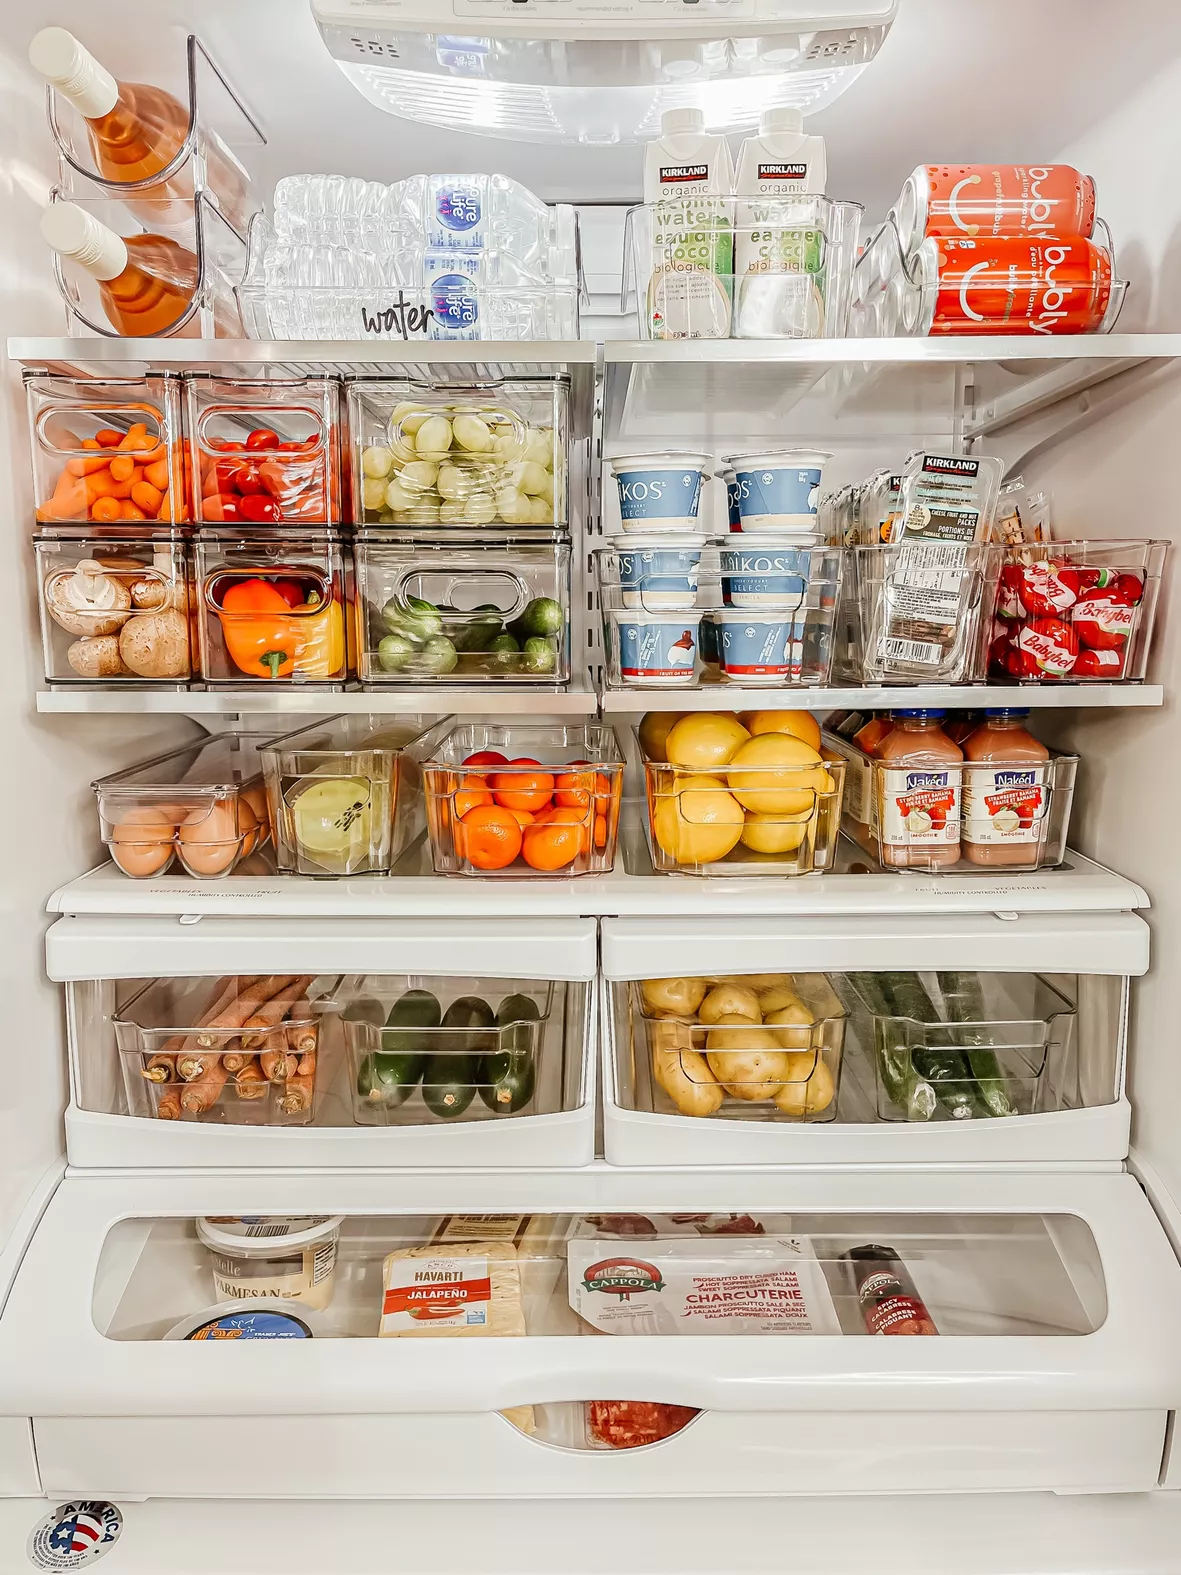 LALASTAR lalastar fridge drawers, 2-pack fridge organizers and